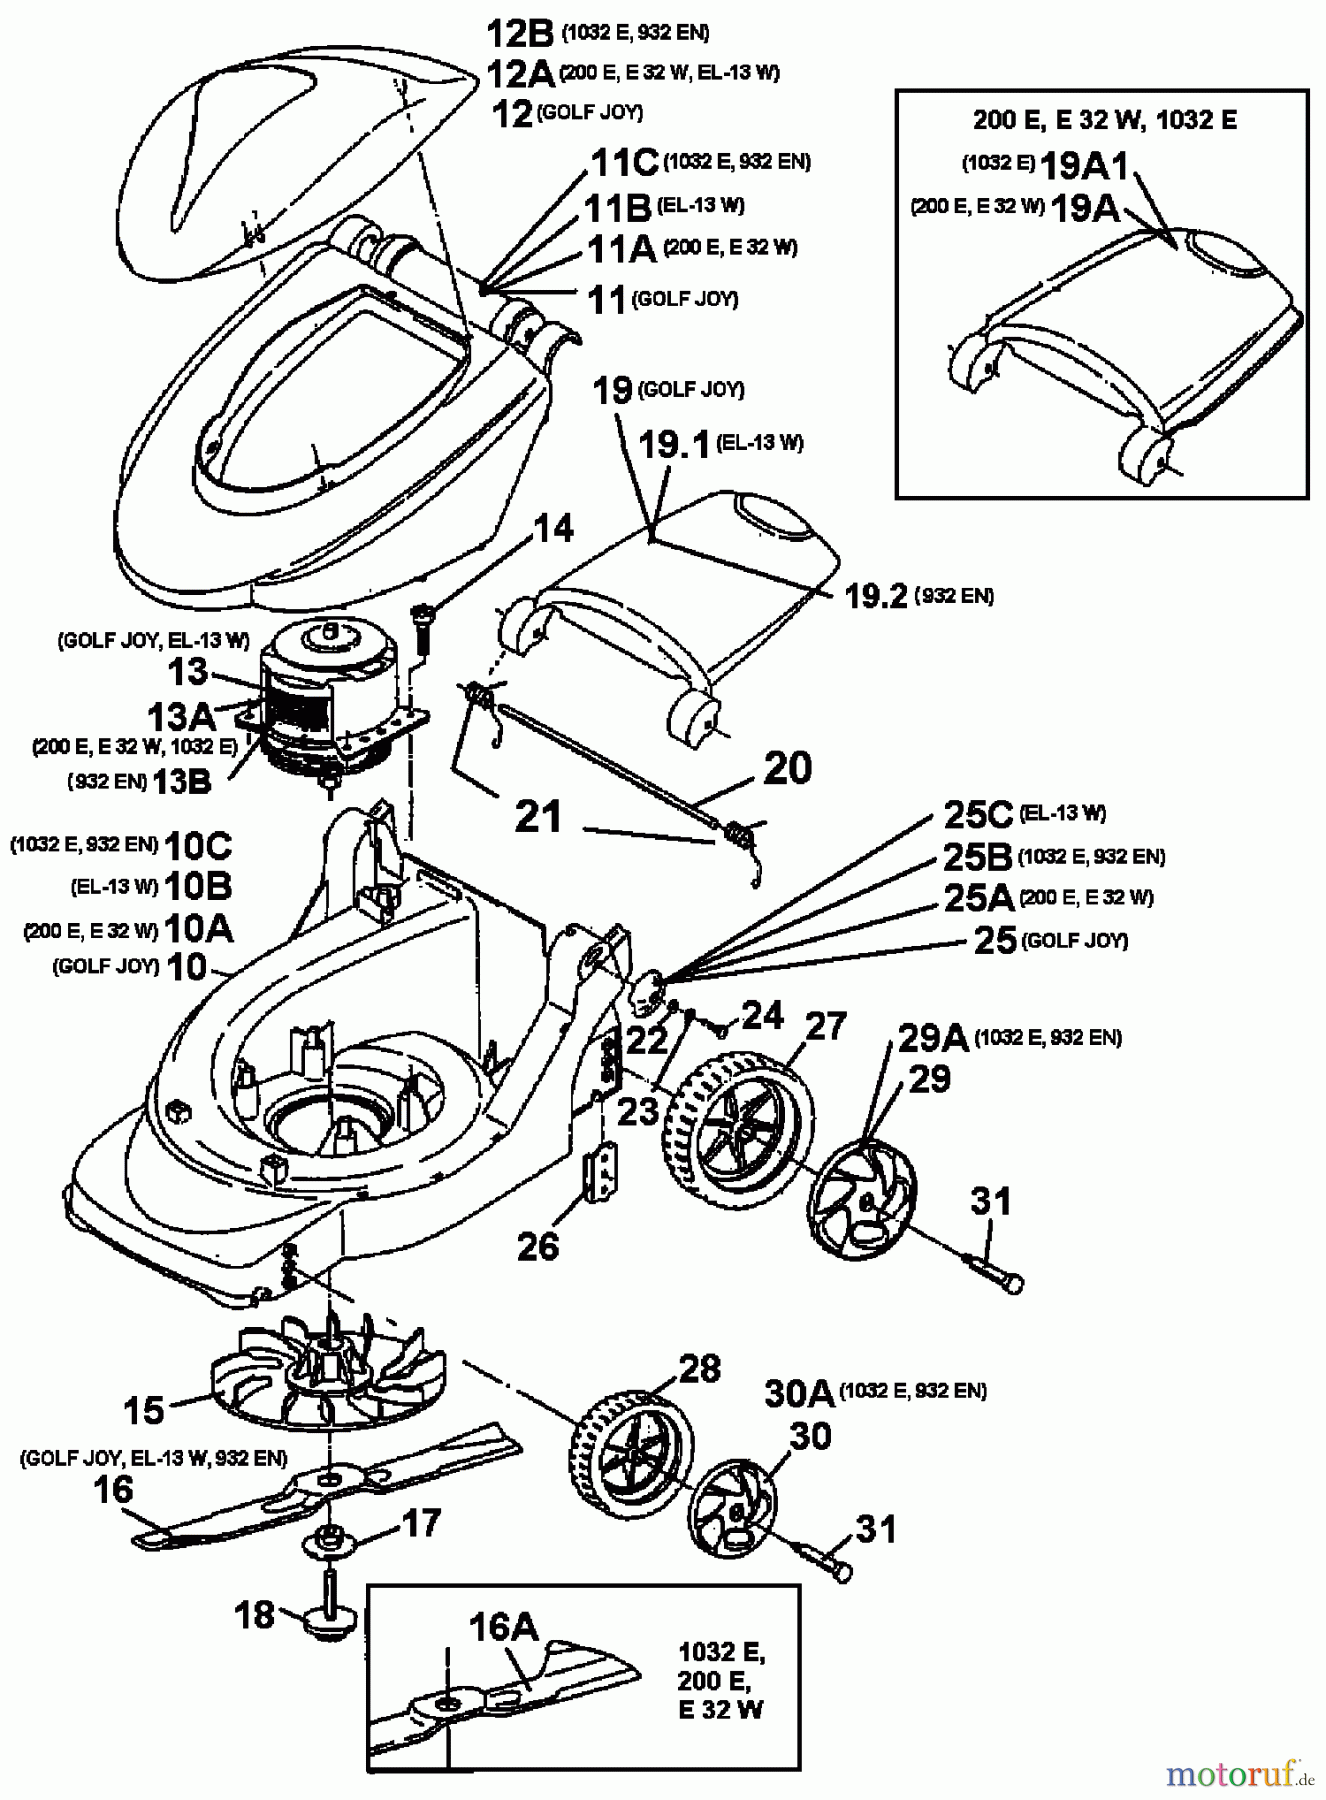  Golf Elektromäher Joy 18A-C3D-648  (1999) Elektromotor, Messer, Räder